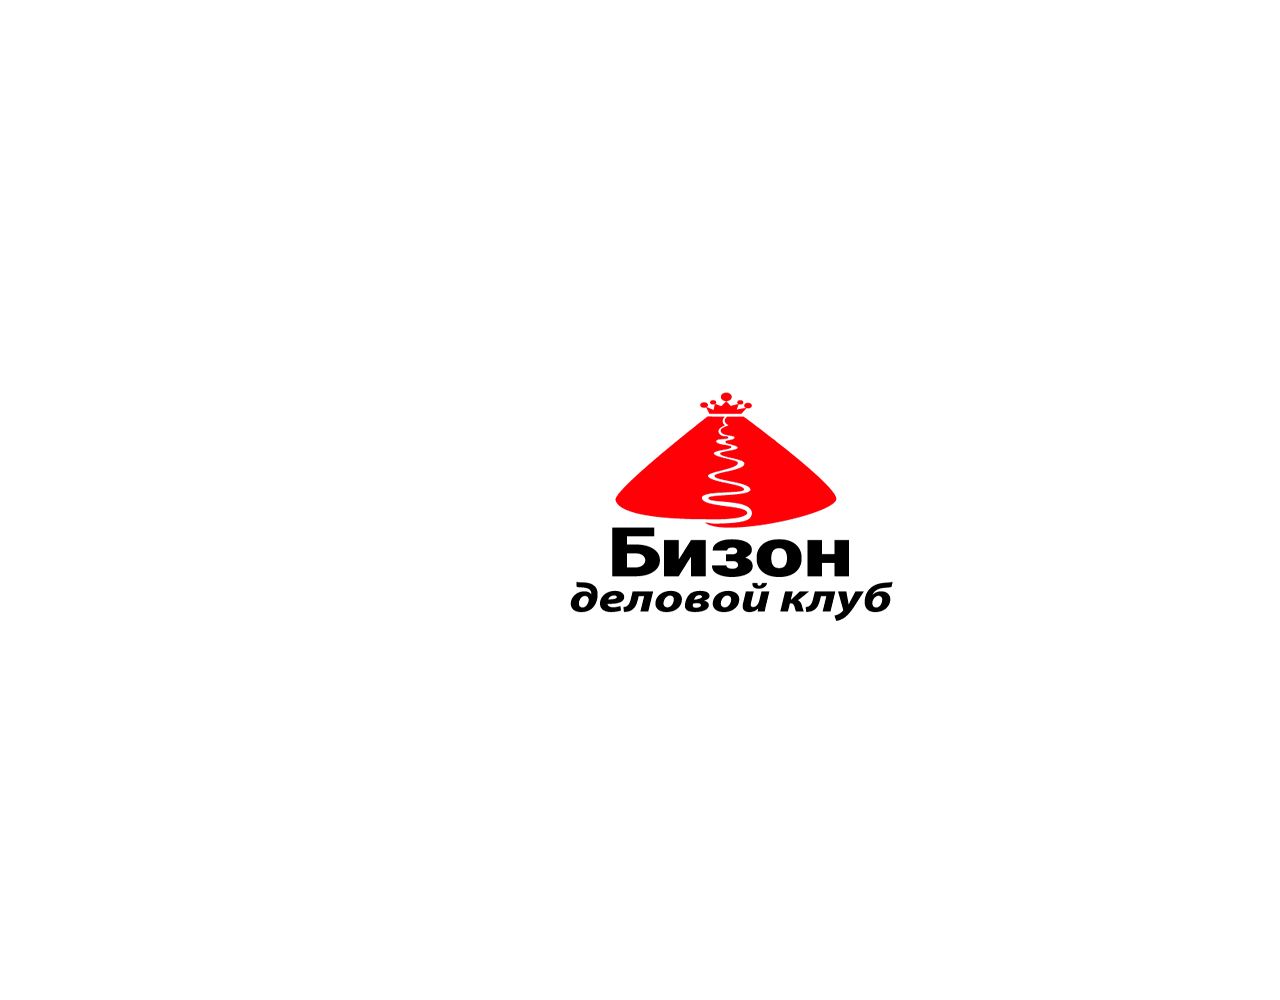 Логотип для «БИЗОН» или «БИЗНЕС-ЗОНА» (полное название) - дизайнер nanalua